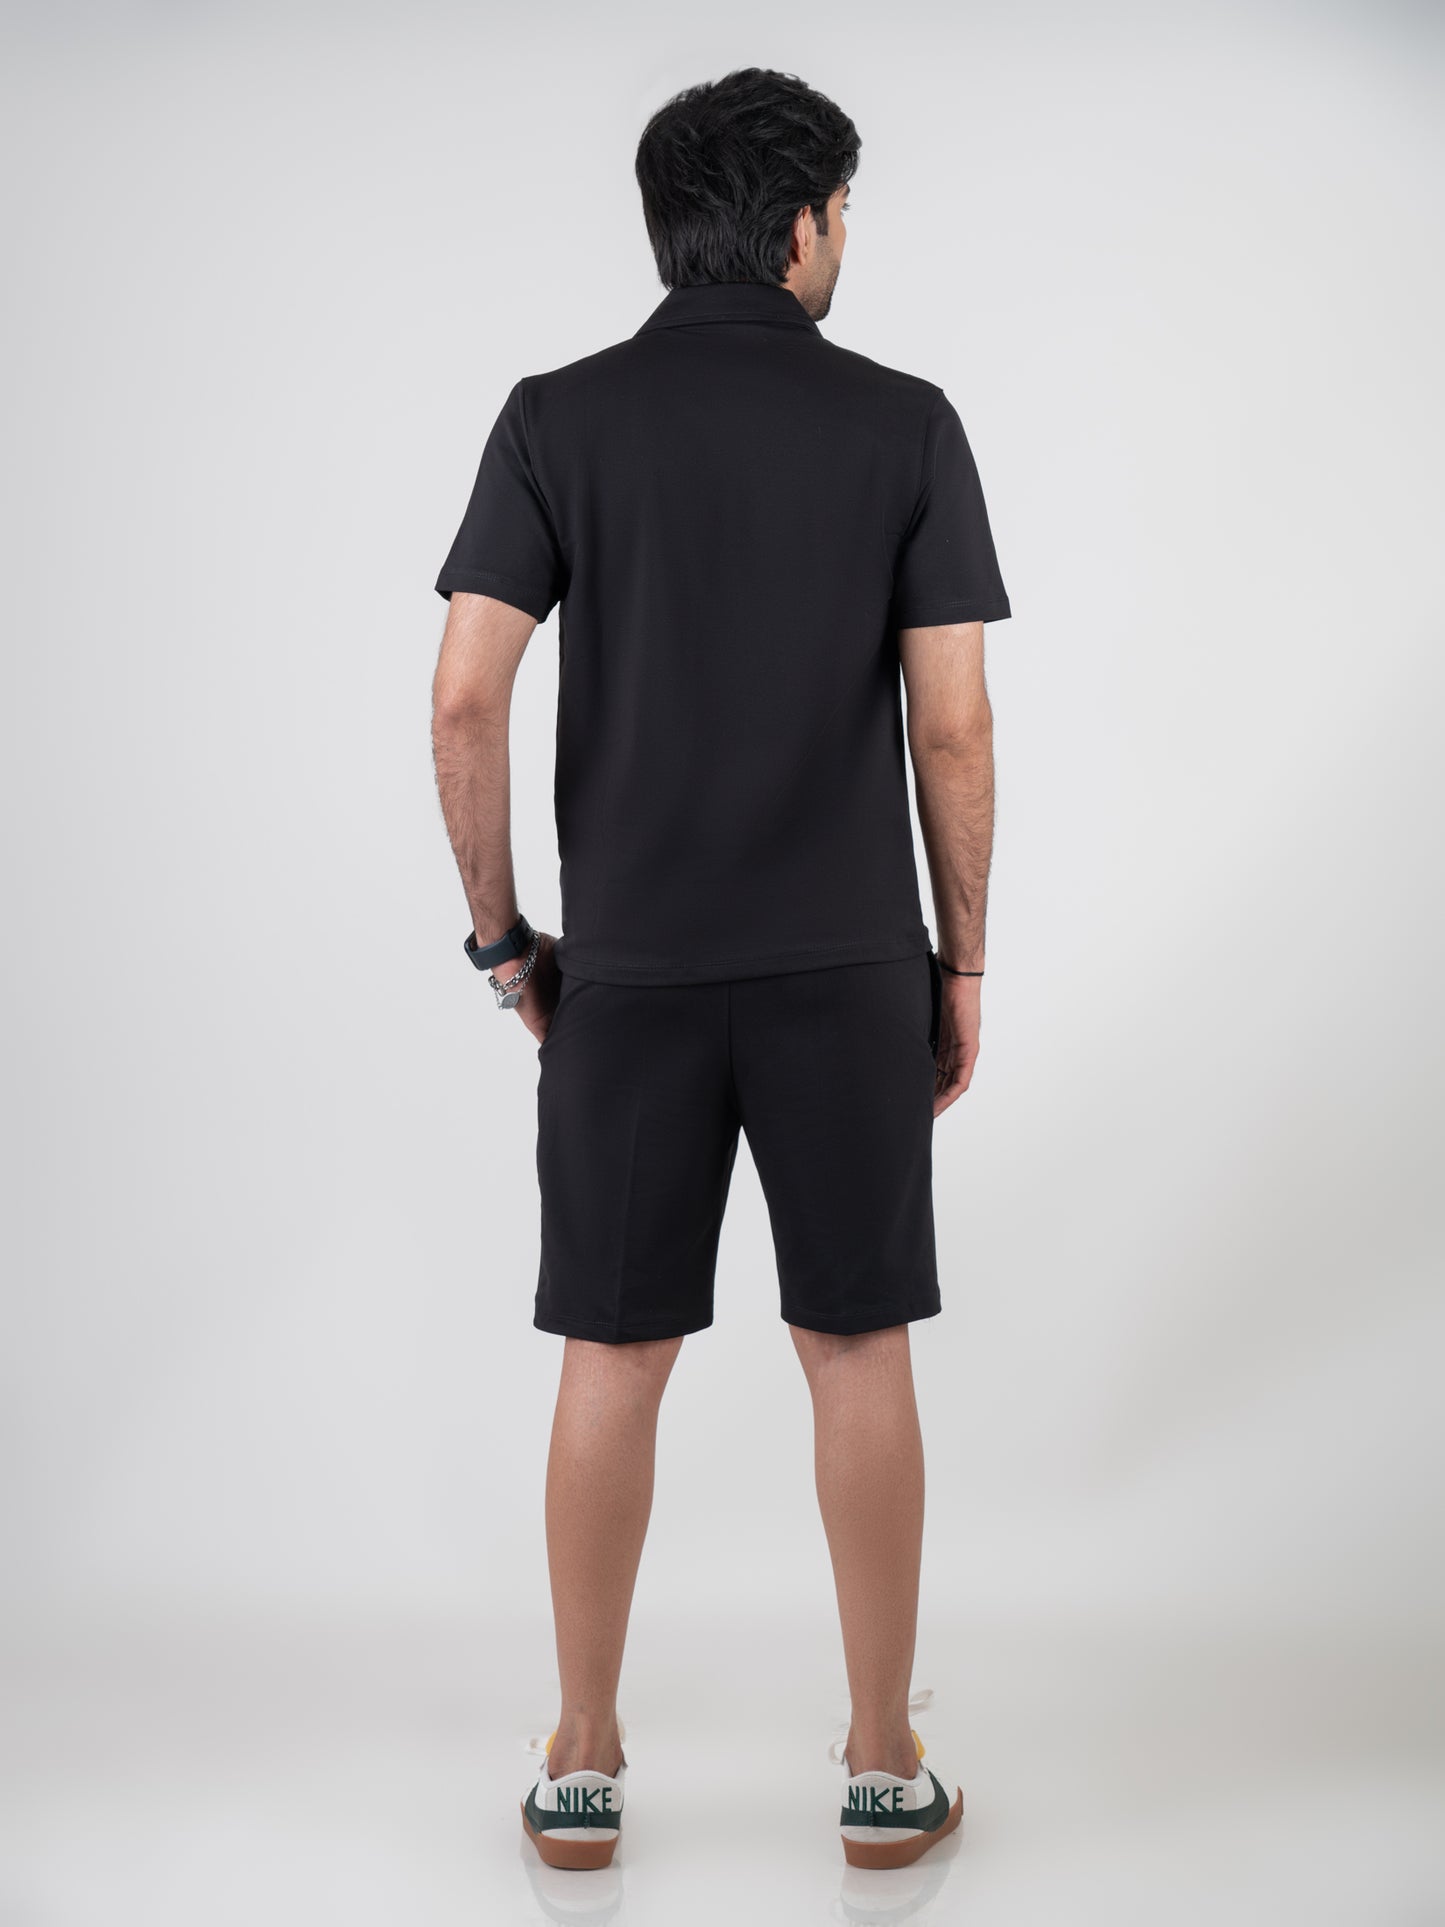 Black Shirt & Shorts Co-Ords For Men